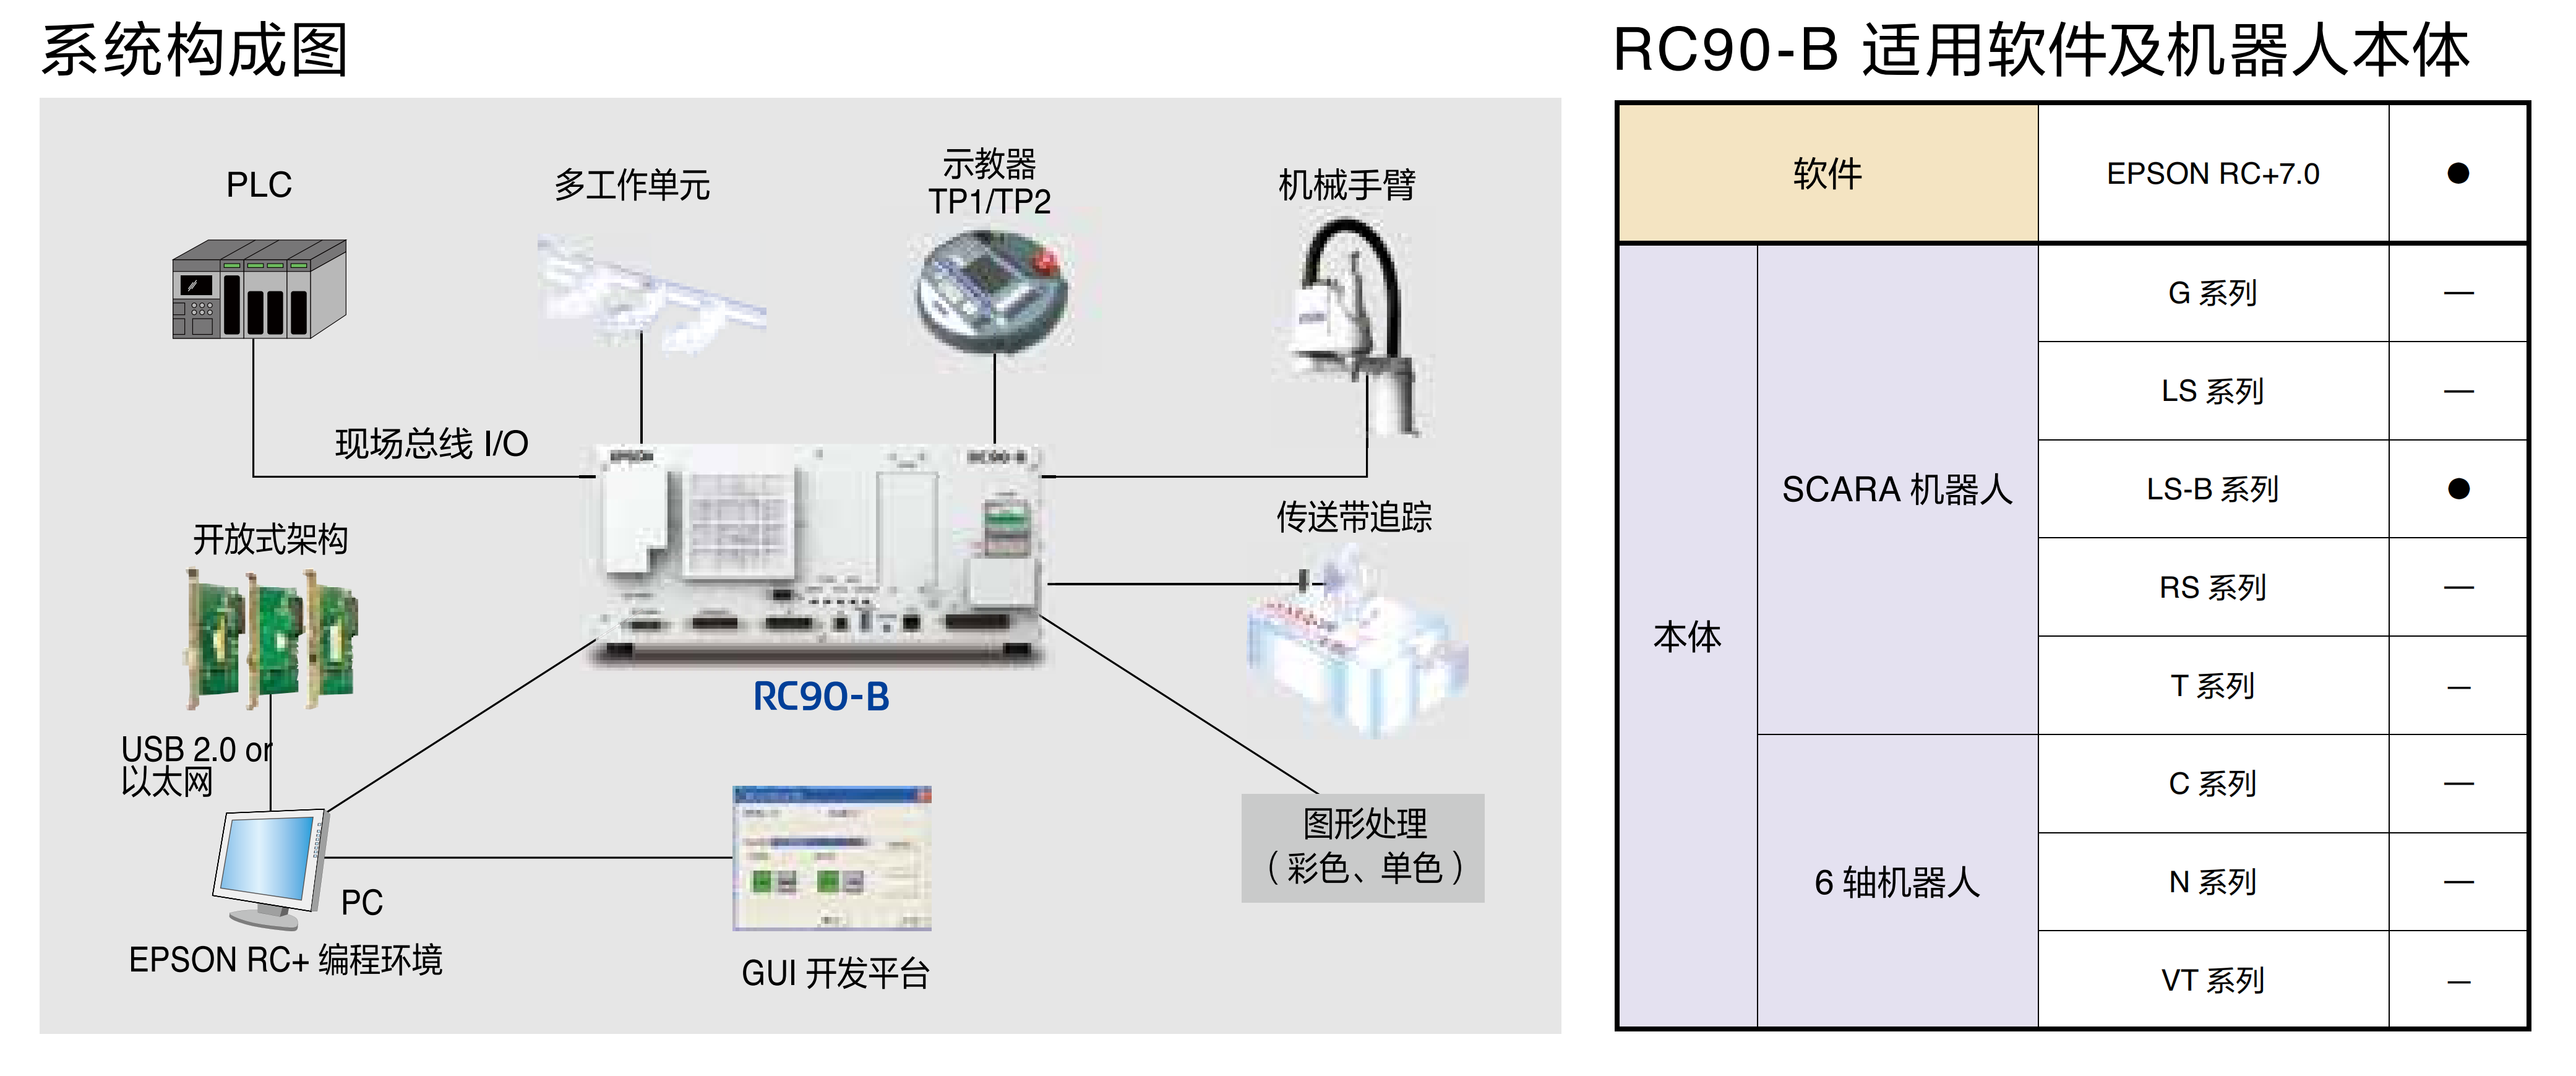 RC90-B控制器